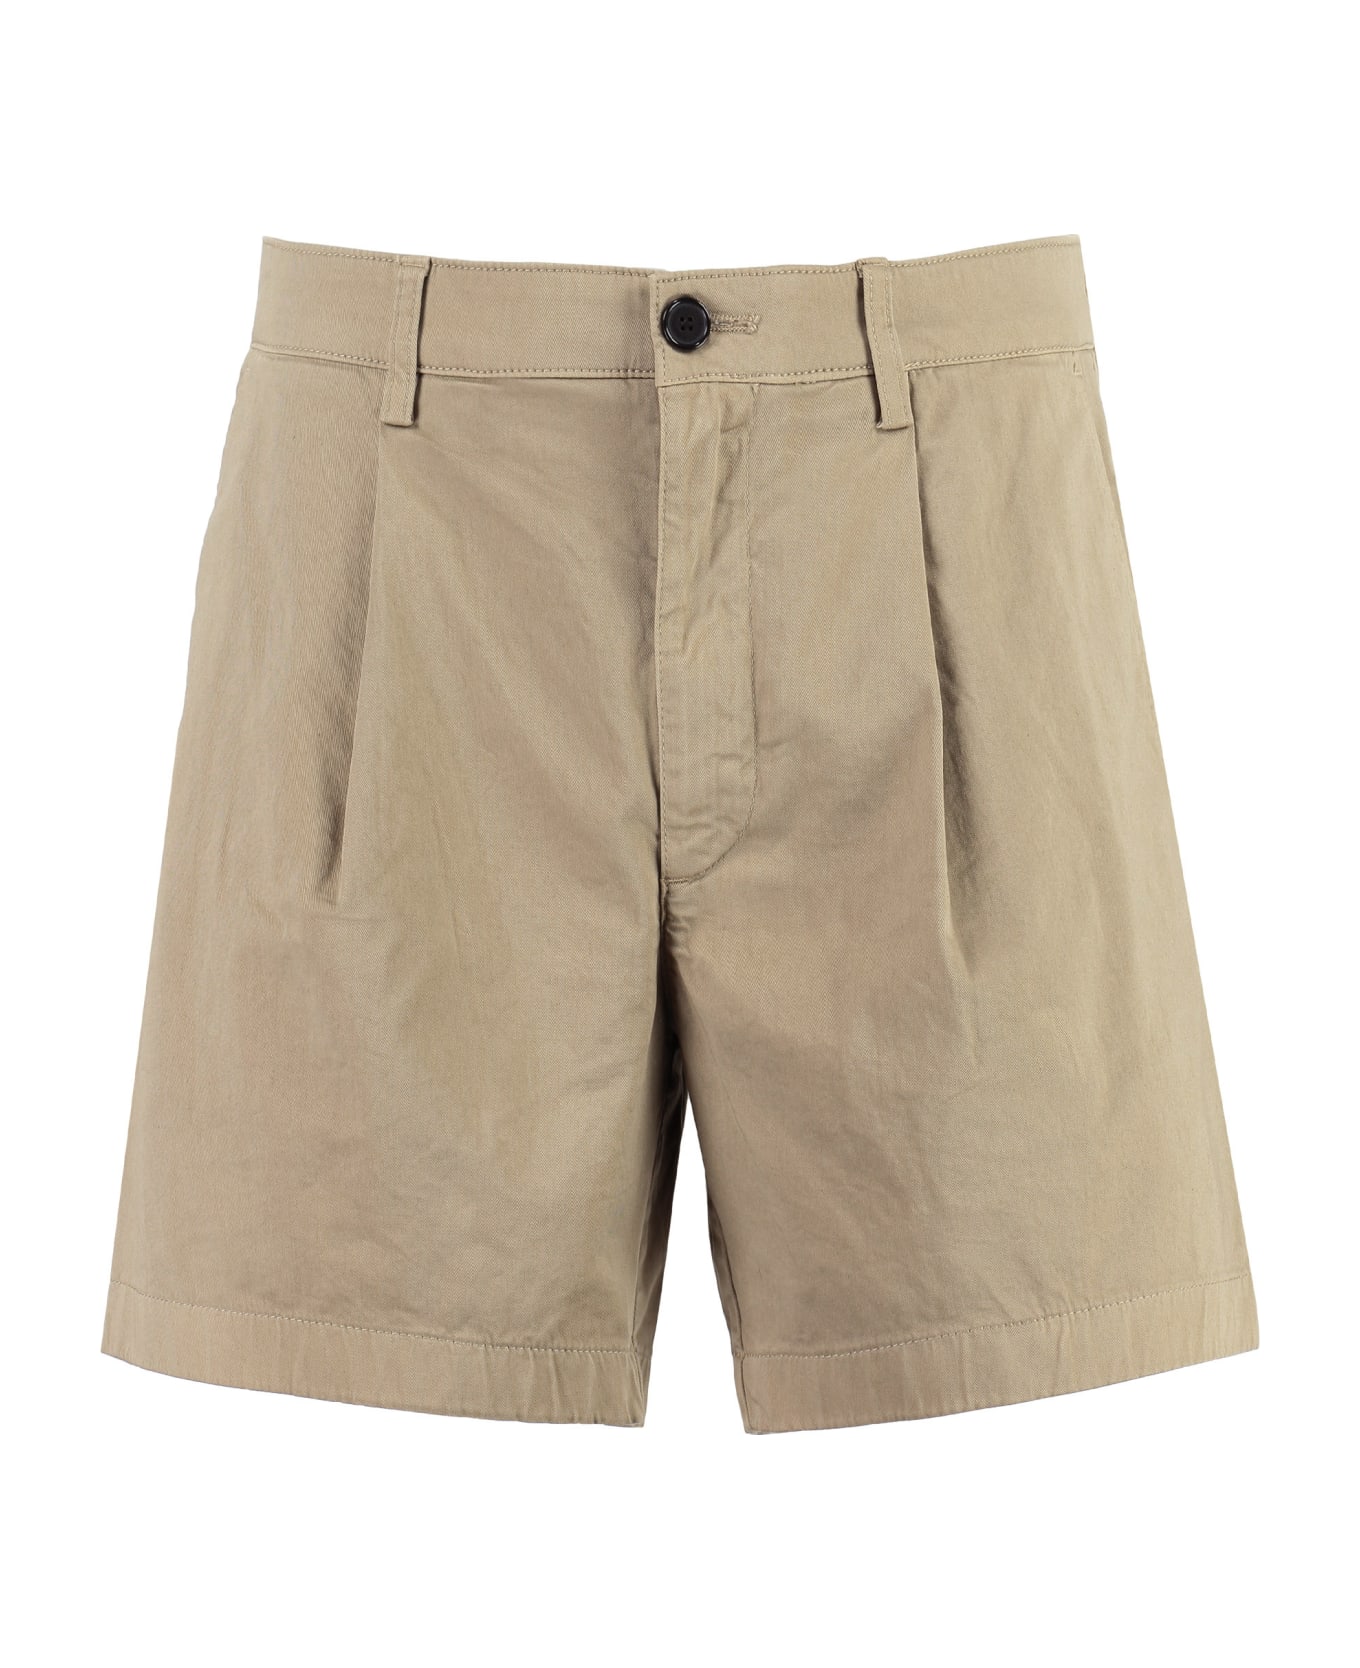 Department Five Cotton Bermuda Shorts - Sand